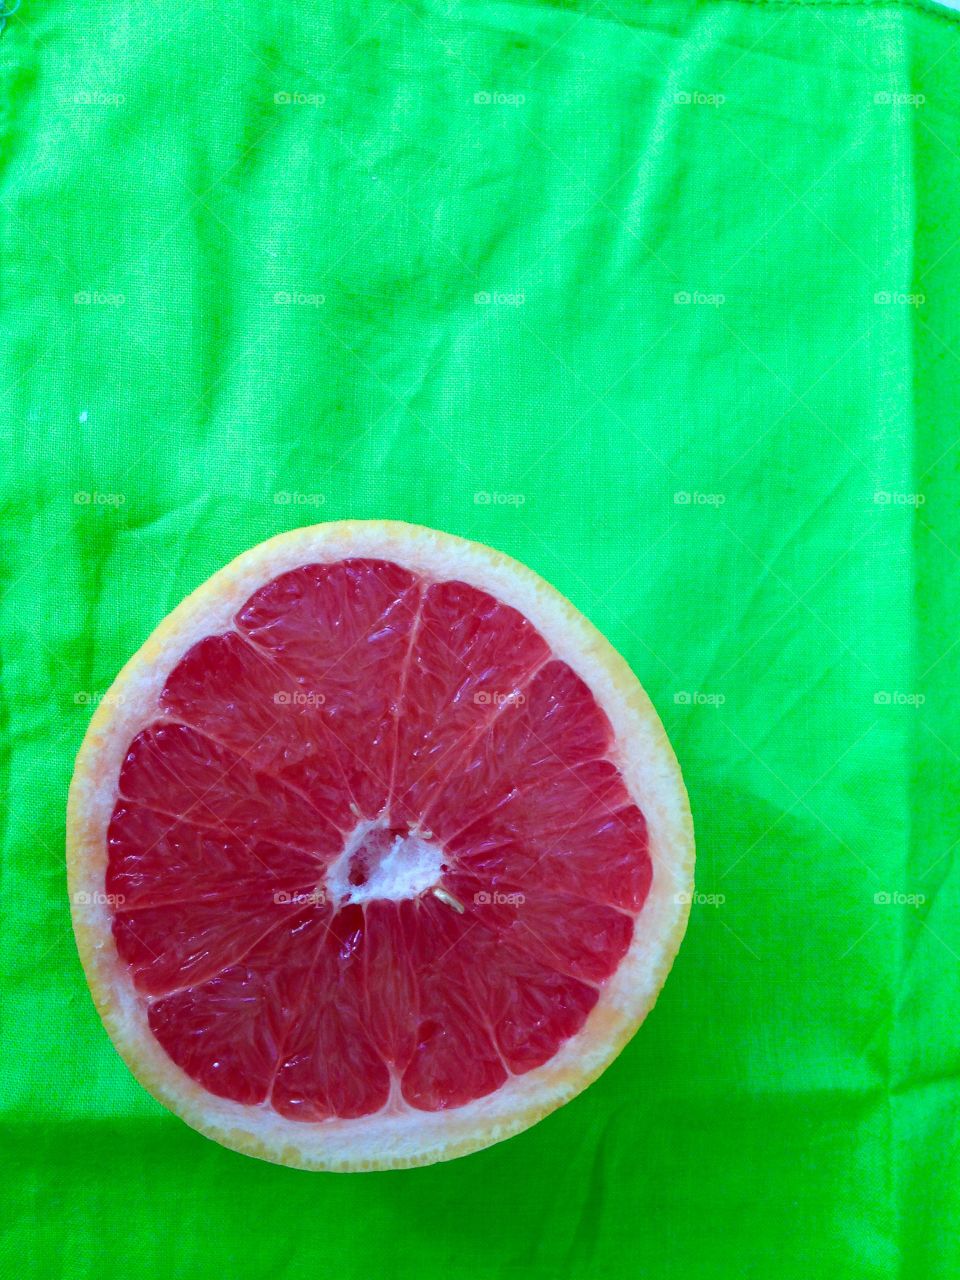 Red grapefruit on green napkin.